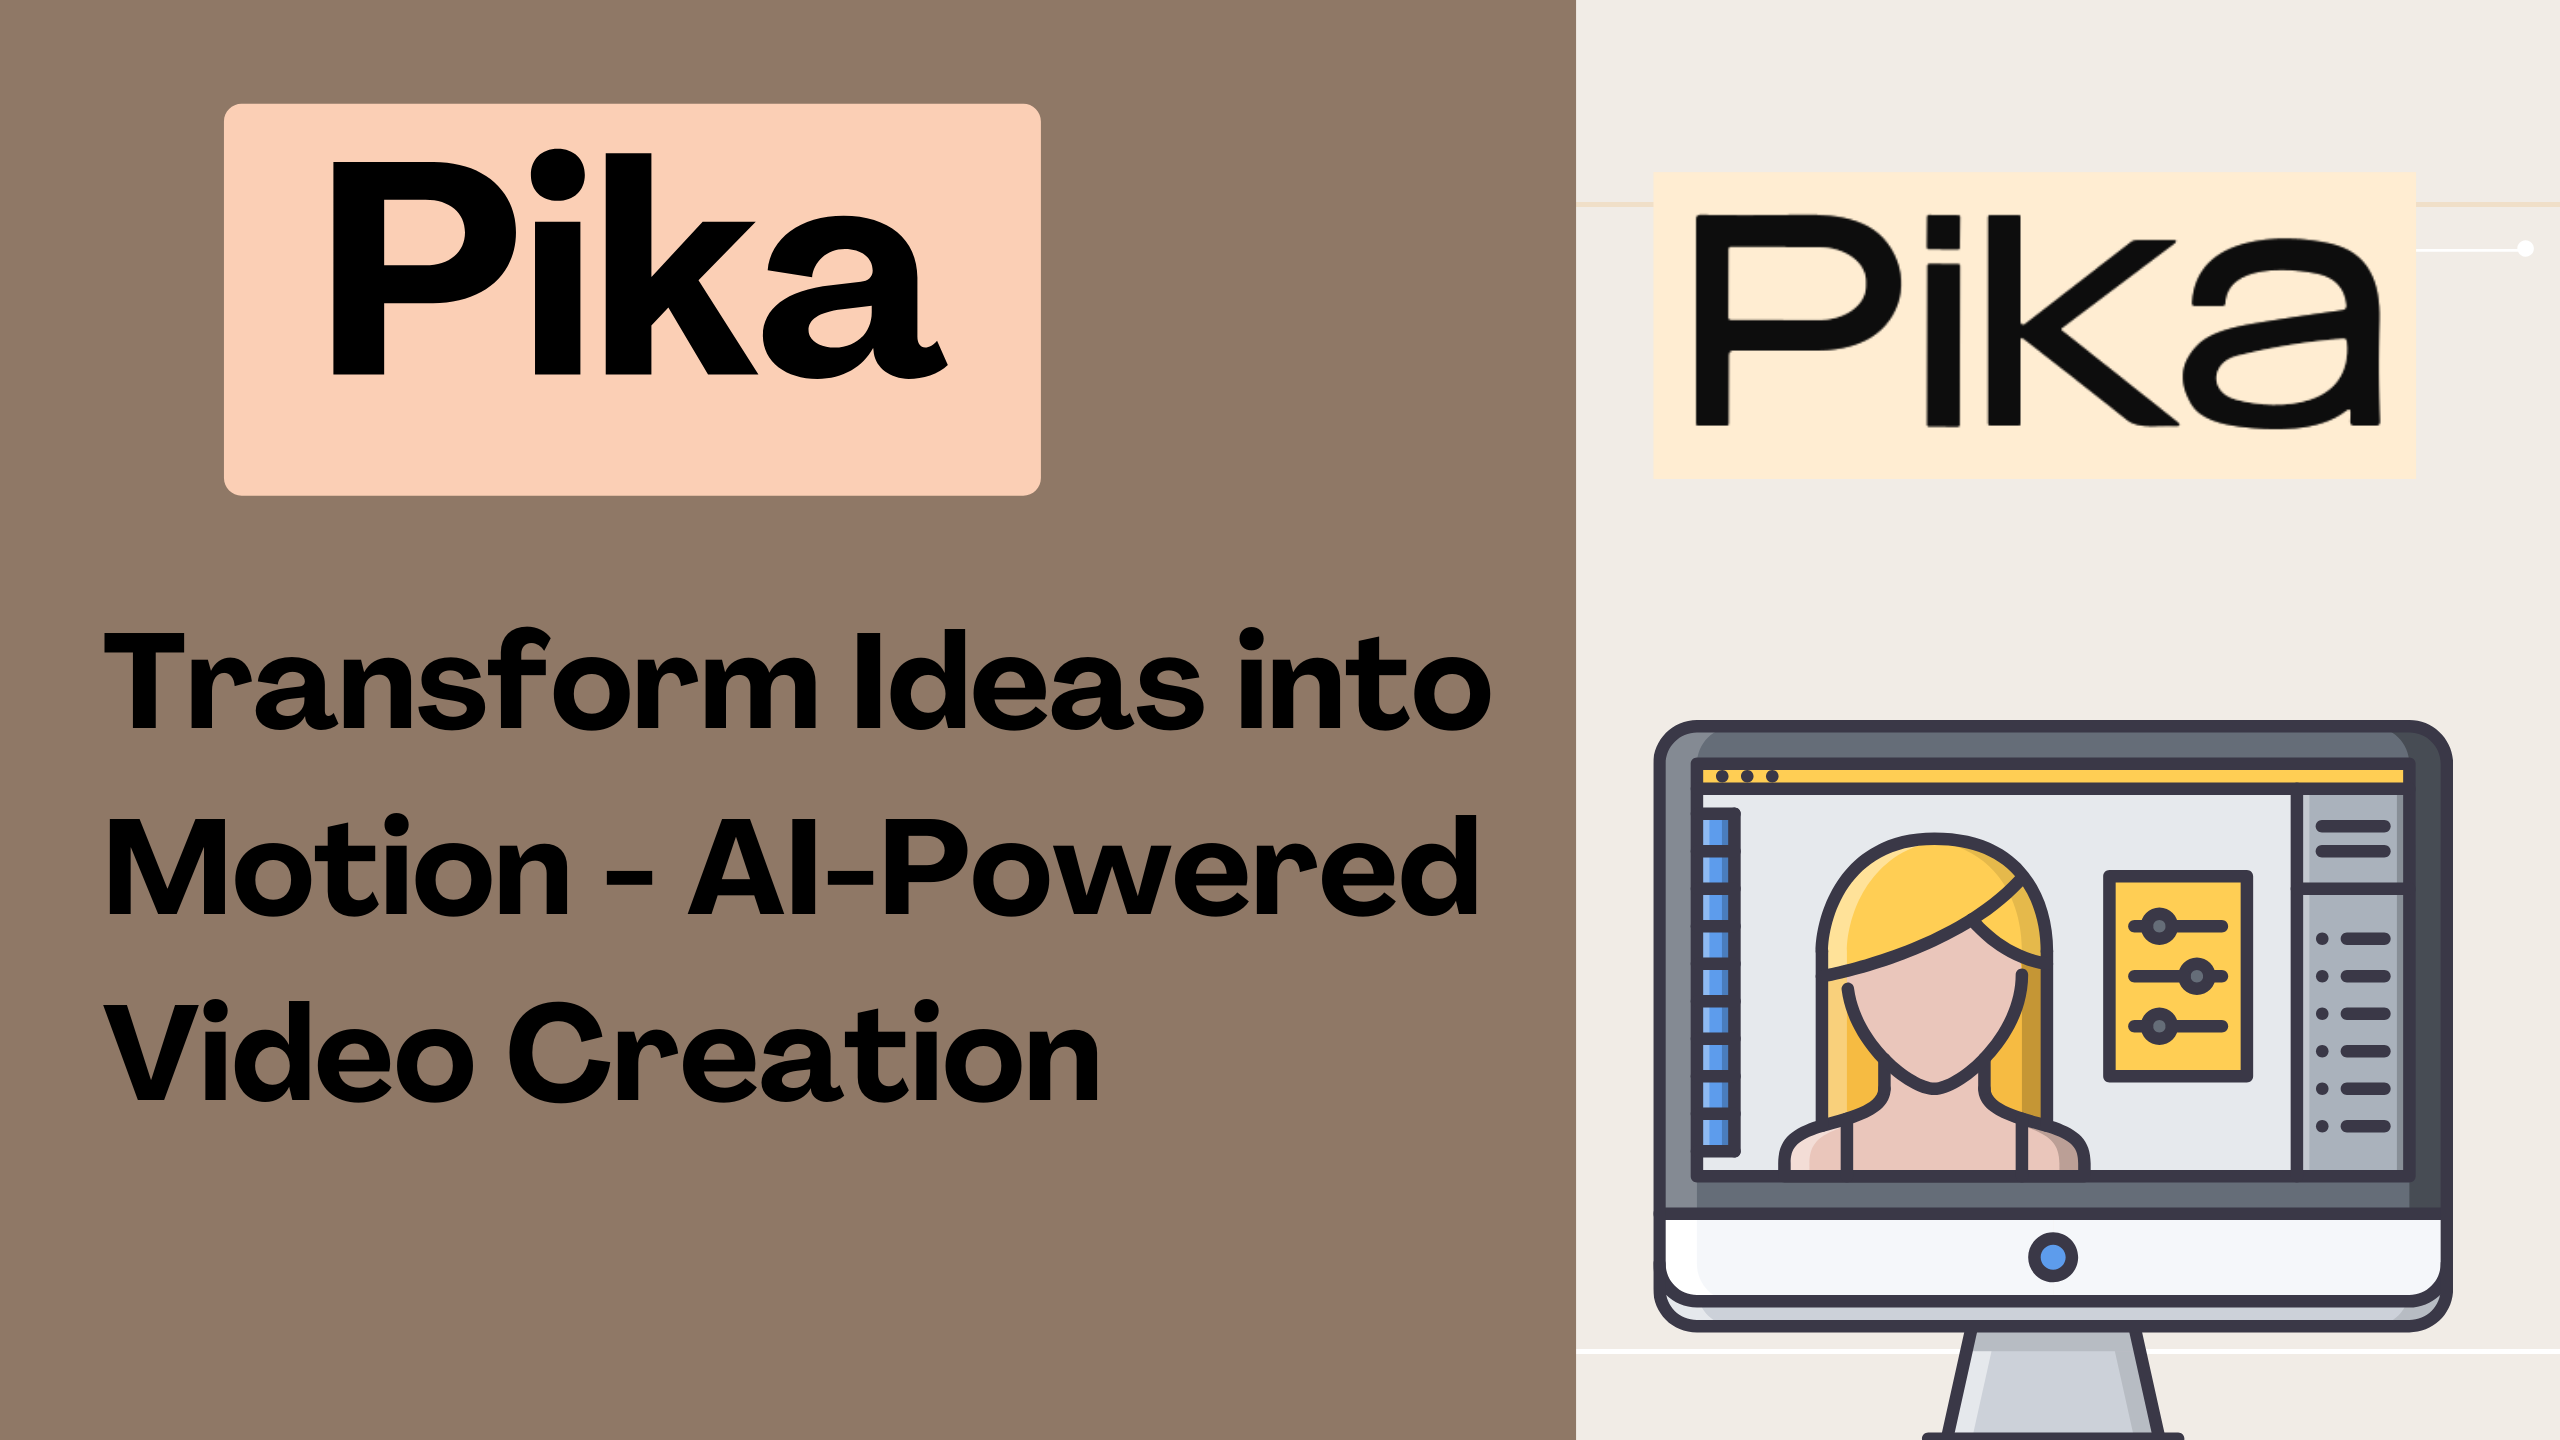 Pika: Transform Ideas into Motion - AI-Powered Video Creation for Everyone